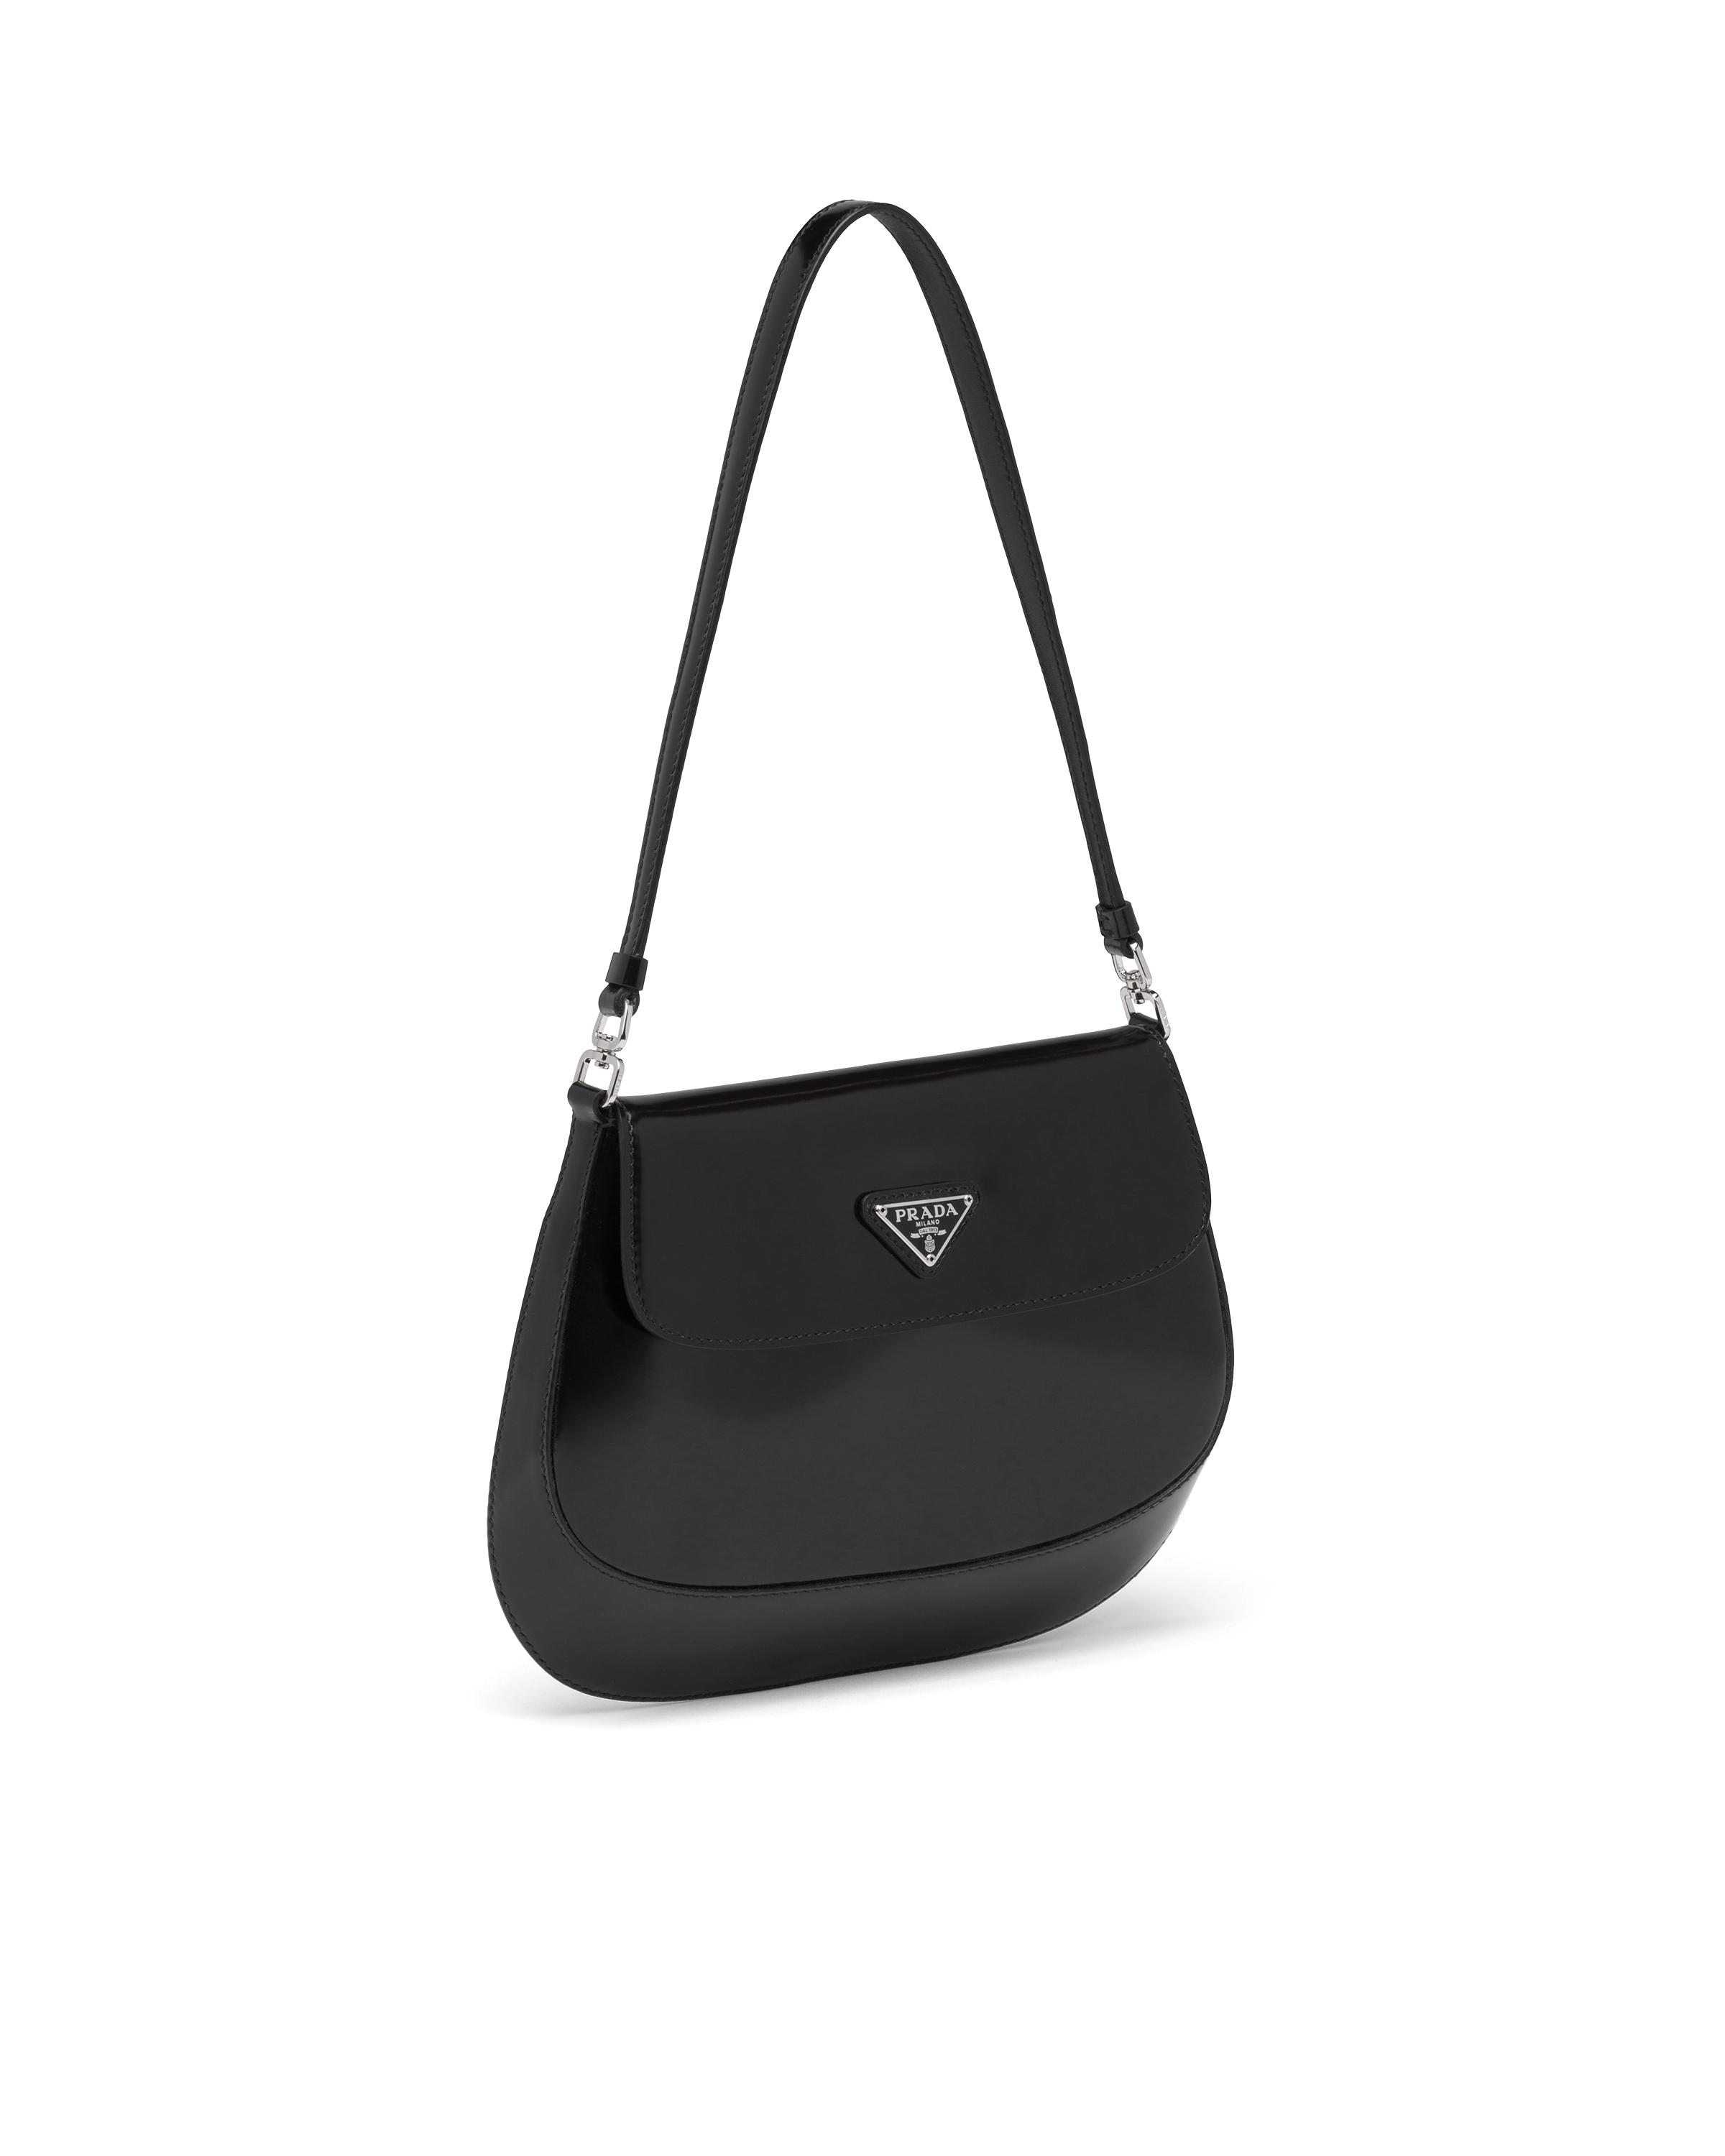 Prada Cleo Brushed Leather Shoulder Bag With Flap in Black - Save 6% - Lyst